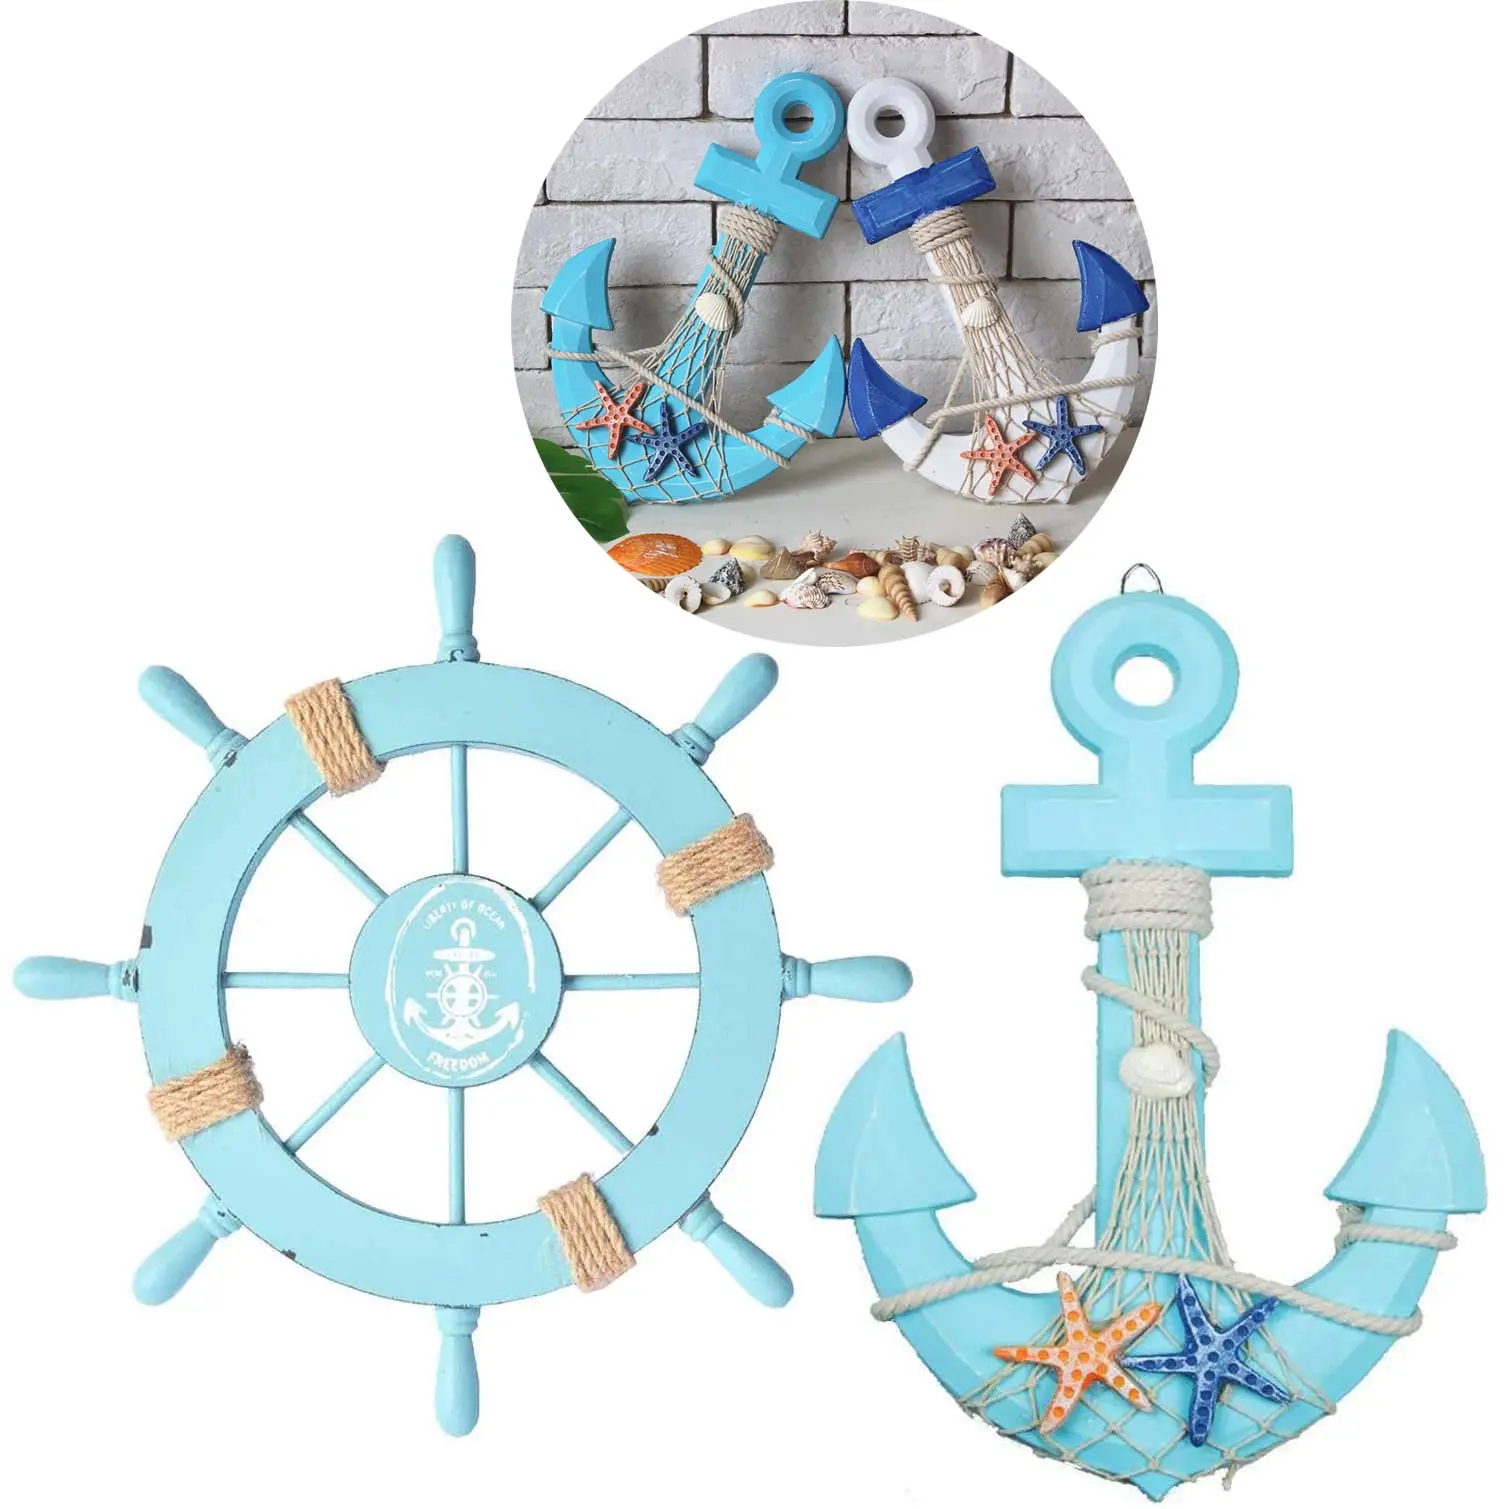 Wooden Nautical Anchor Wall Hanging Ornament, Beach Wooden Boat Ship Steering Wheel Wall Decor, Nautical Sailing Ship Home Decor